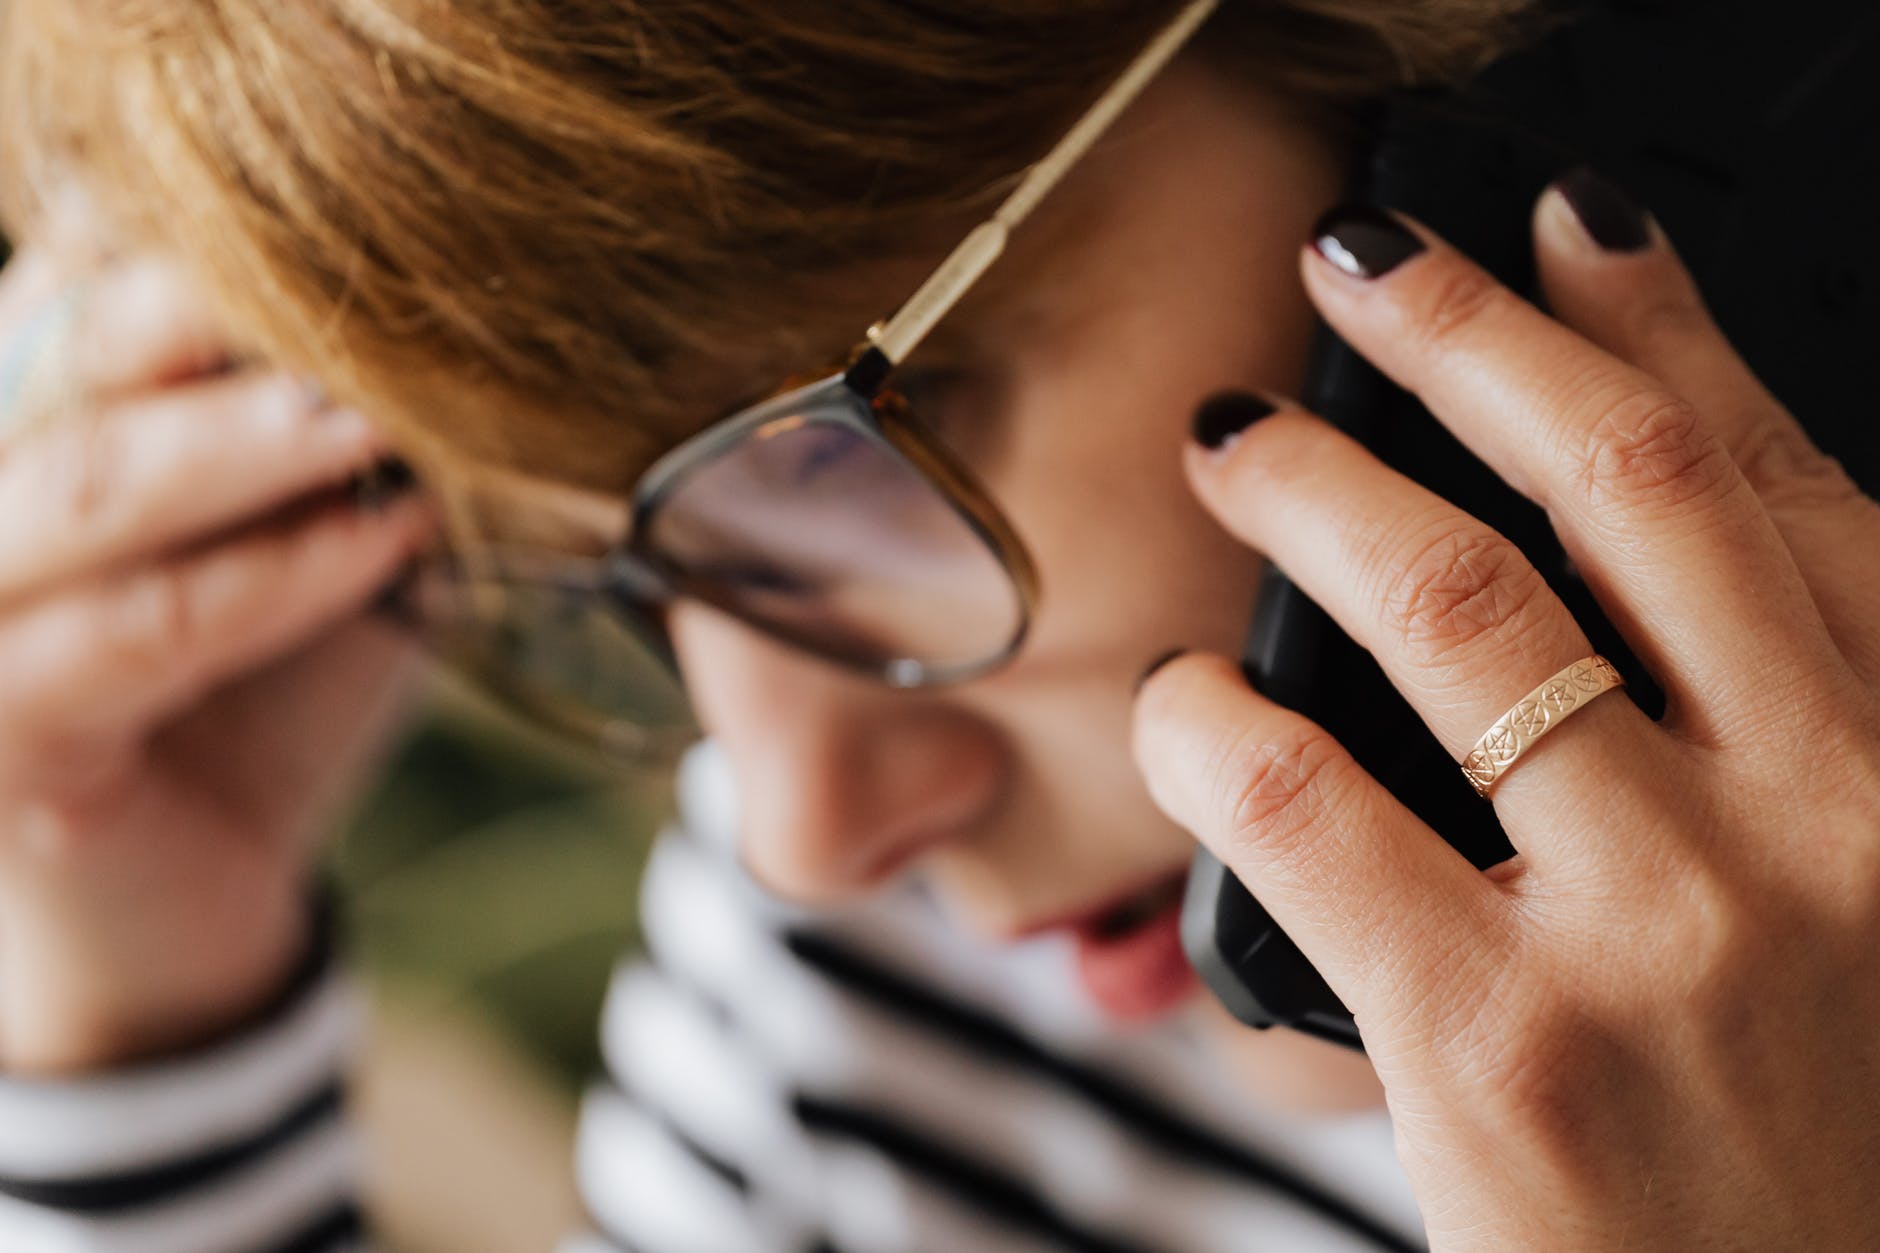 Una mujer joven hace una llamada telefónica. | Foto: Pexels